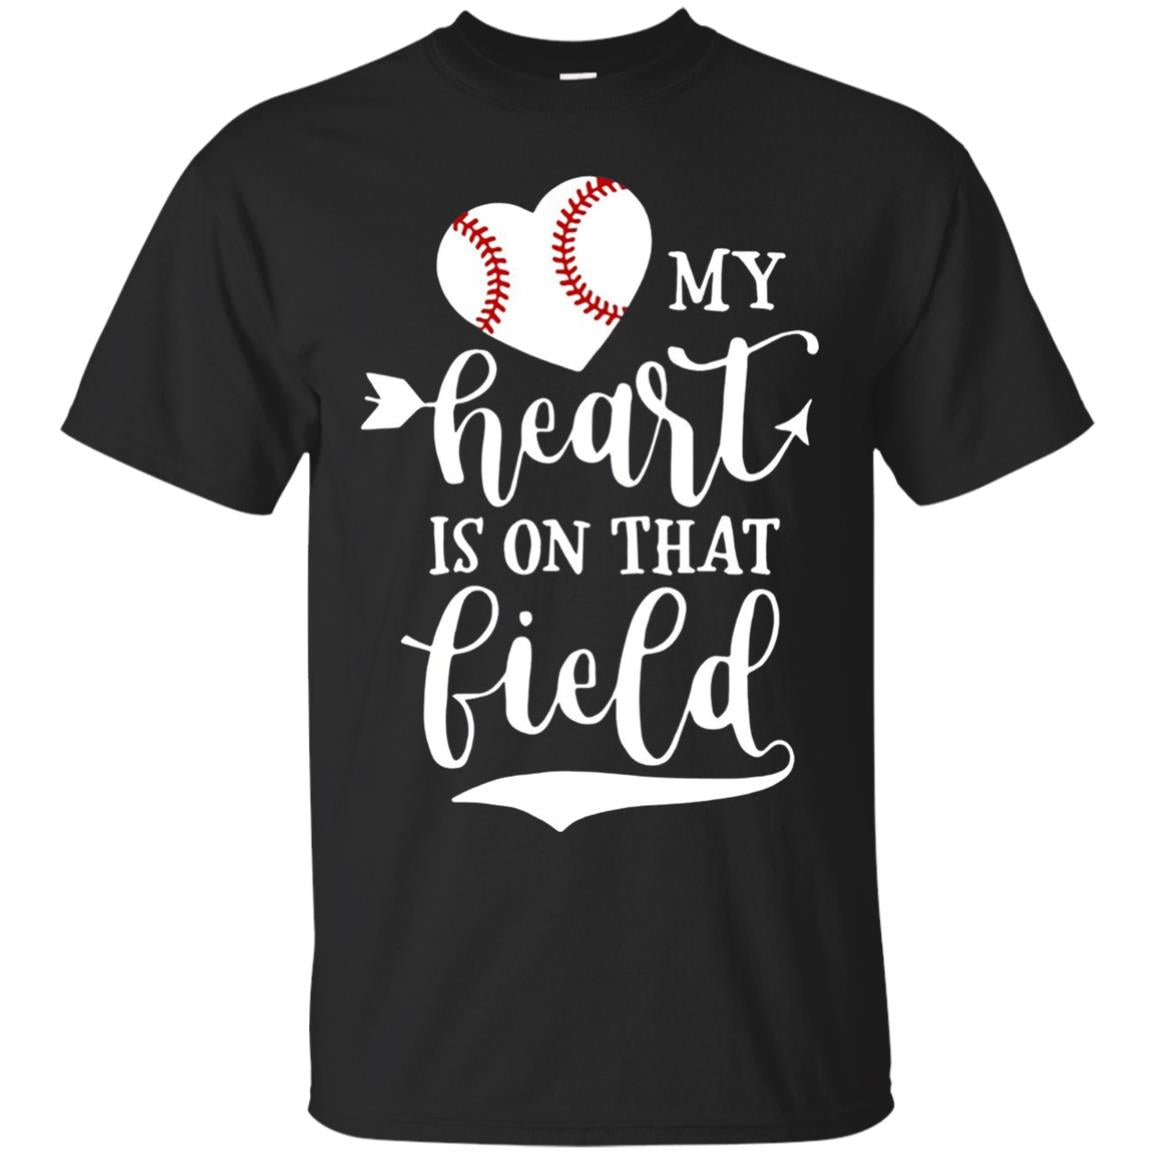 My Heart Is On That Field Softball Mom Shirt